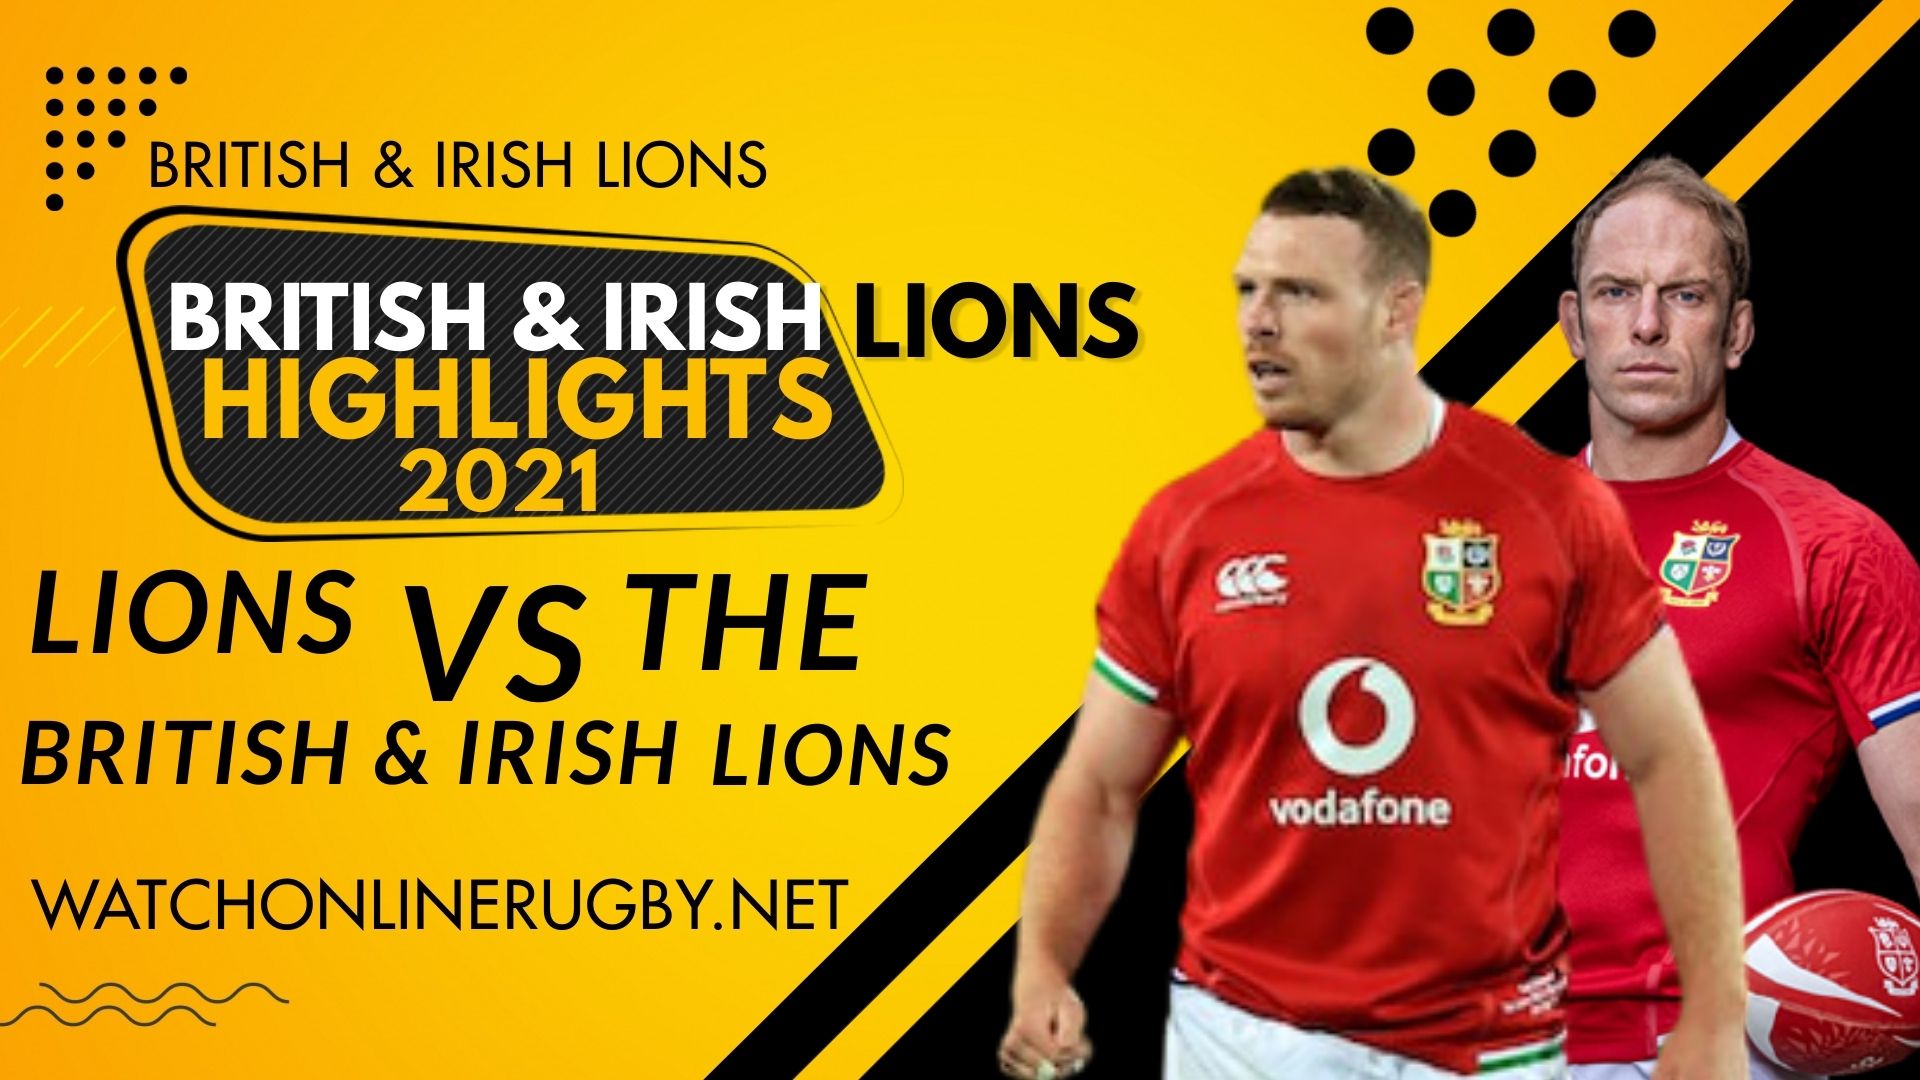 Lions Vs British Irish Lions Highlights 2021